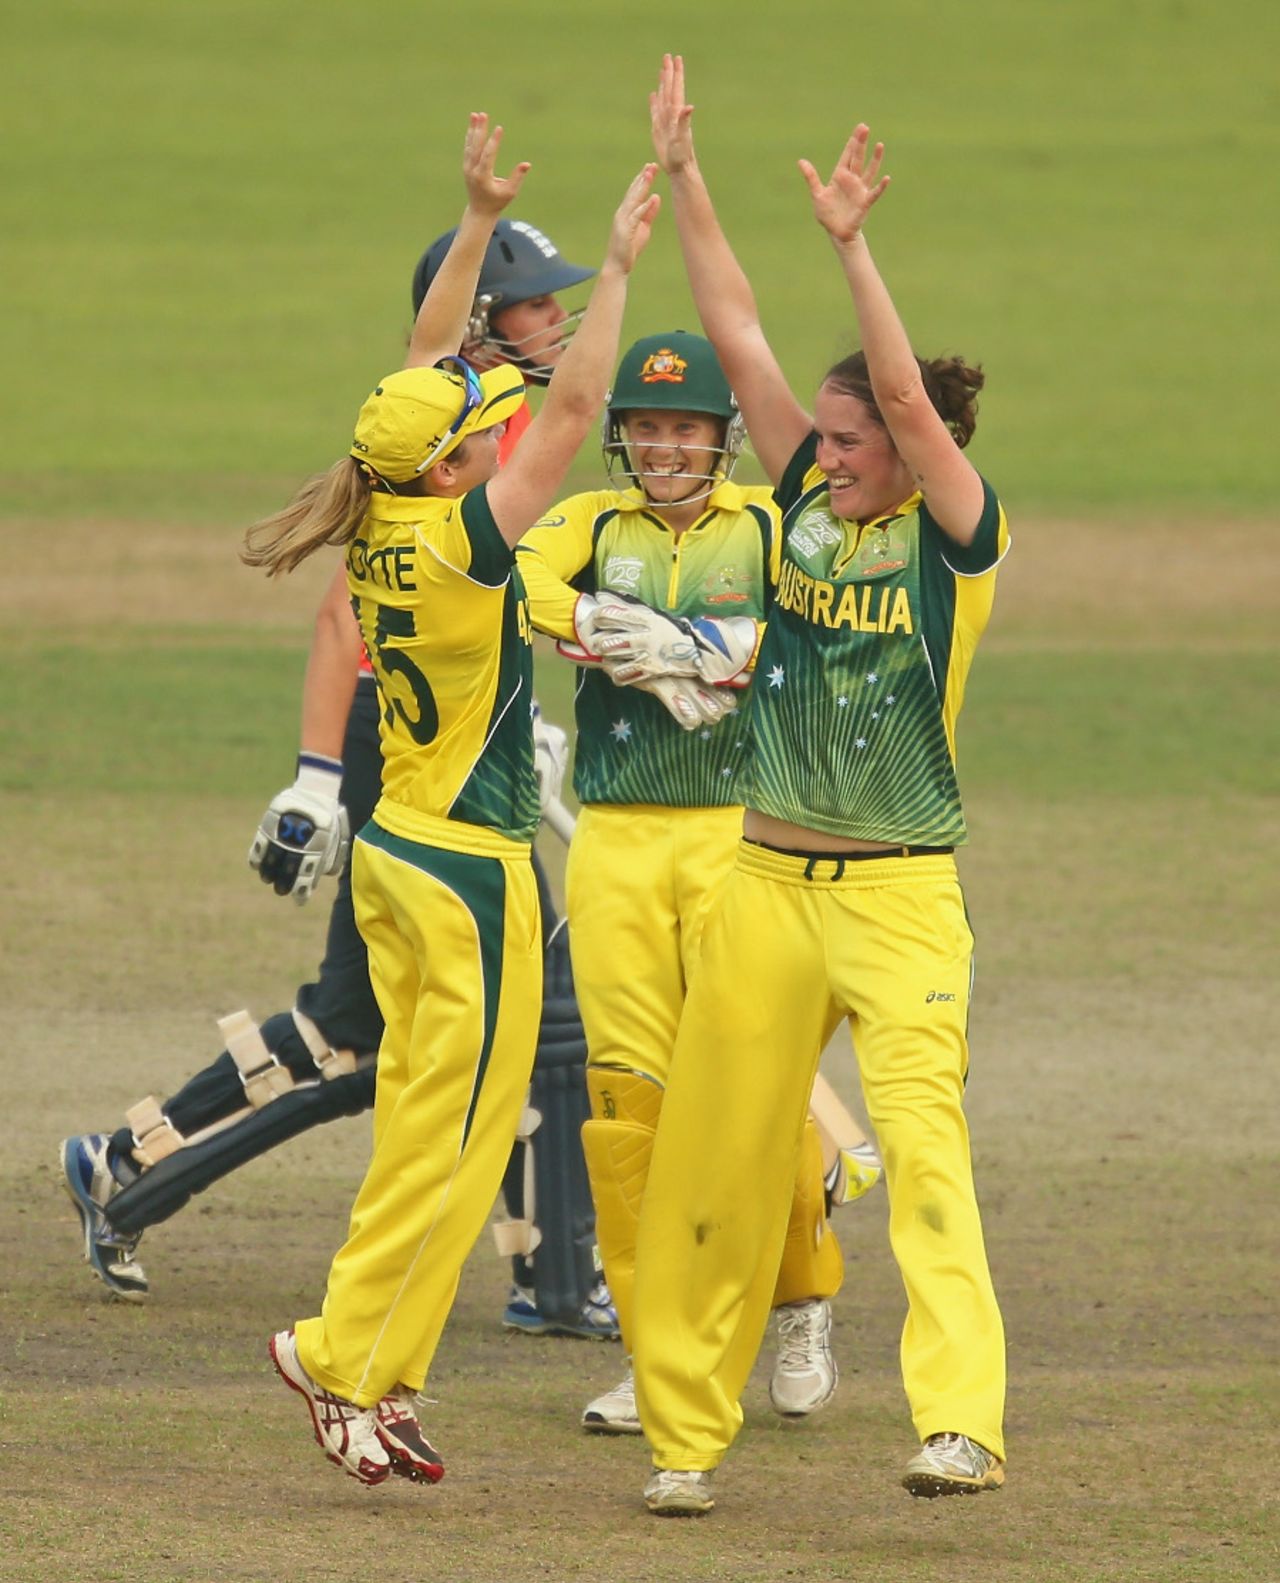 Regular wickets prevented England accelerating, Australia v England, Women's World T20, final, April 6, 2014